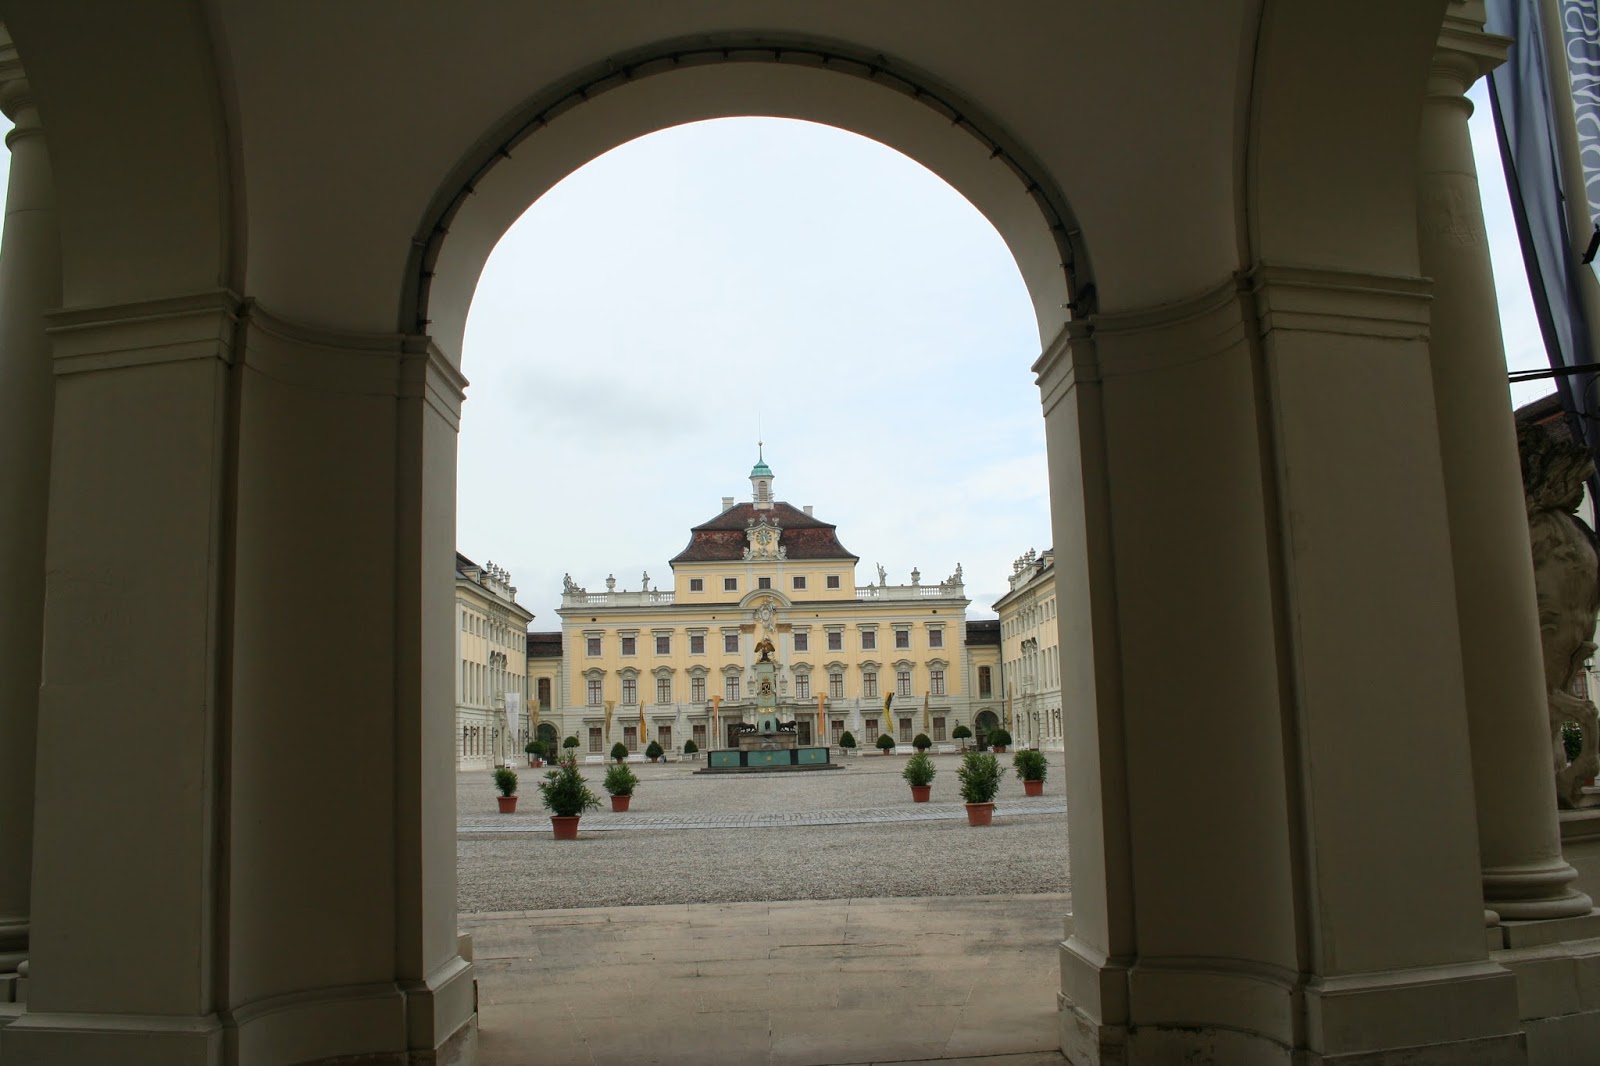 foto del Residenzschloss de Ludwigsburg